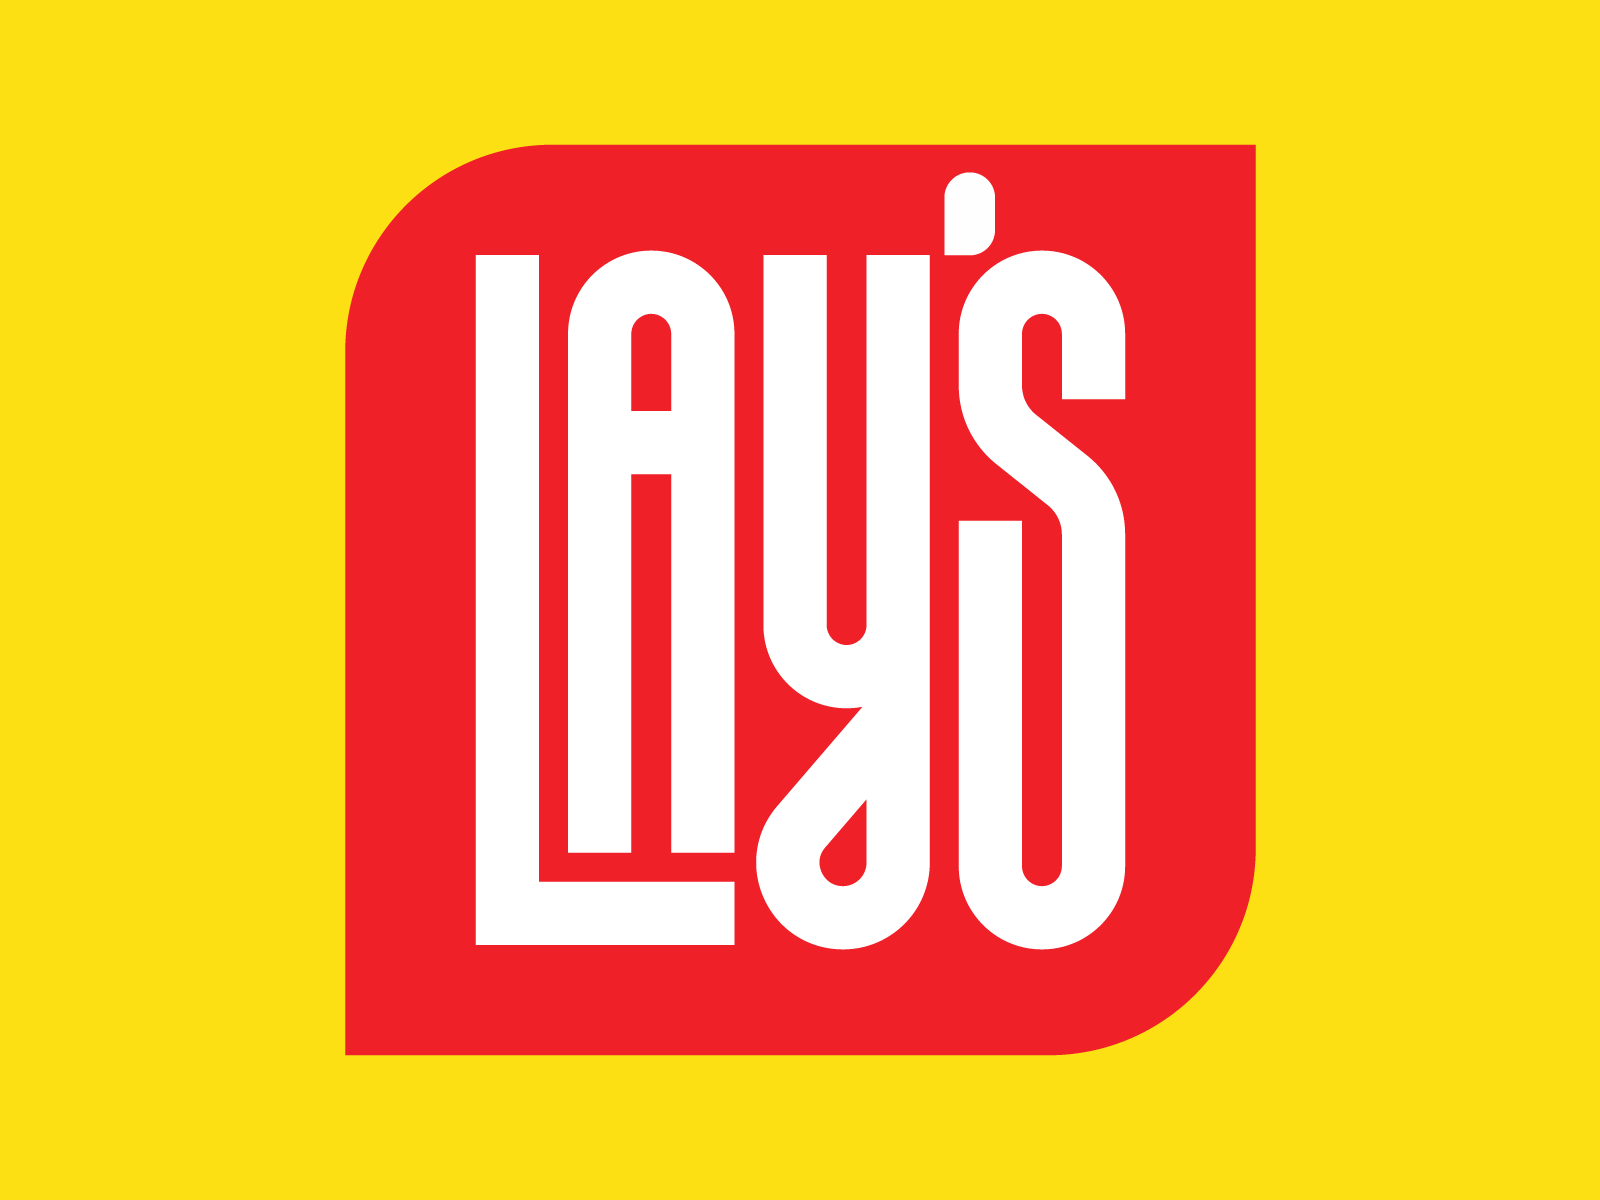 Lay's by Rafael Serra on Dribbble